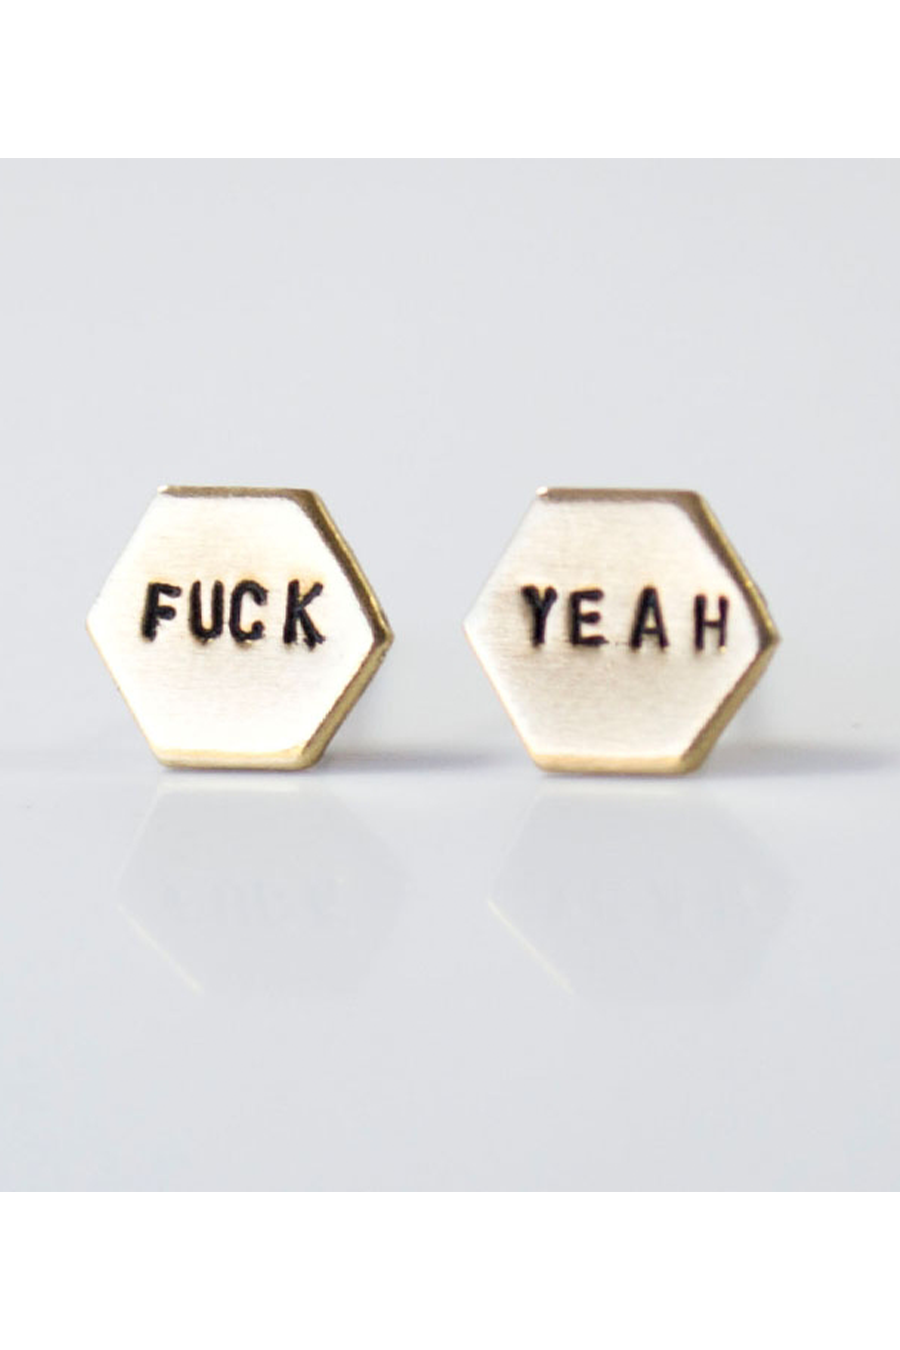 Fuck Yeah Hexagon Earrings | Brass - Main Image Number 1 of 2